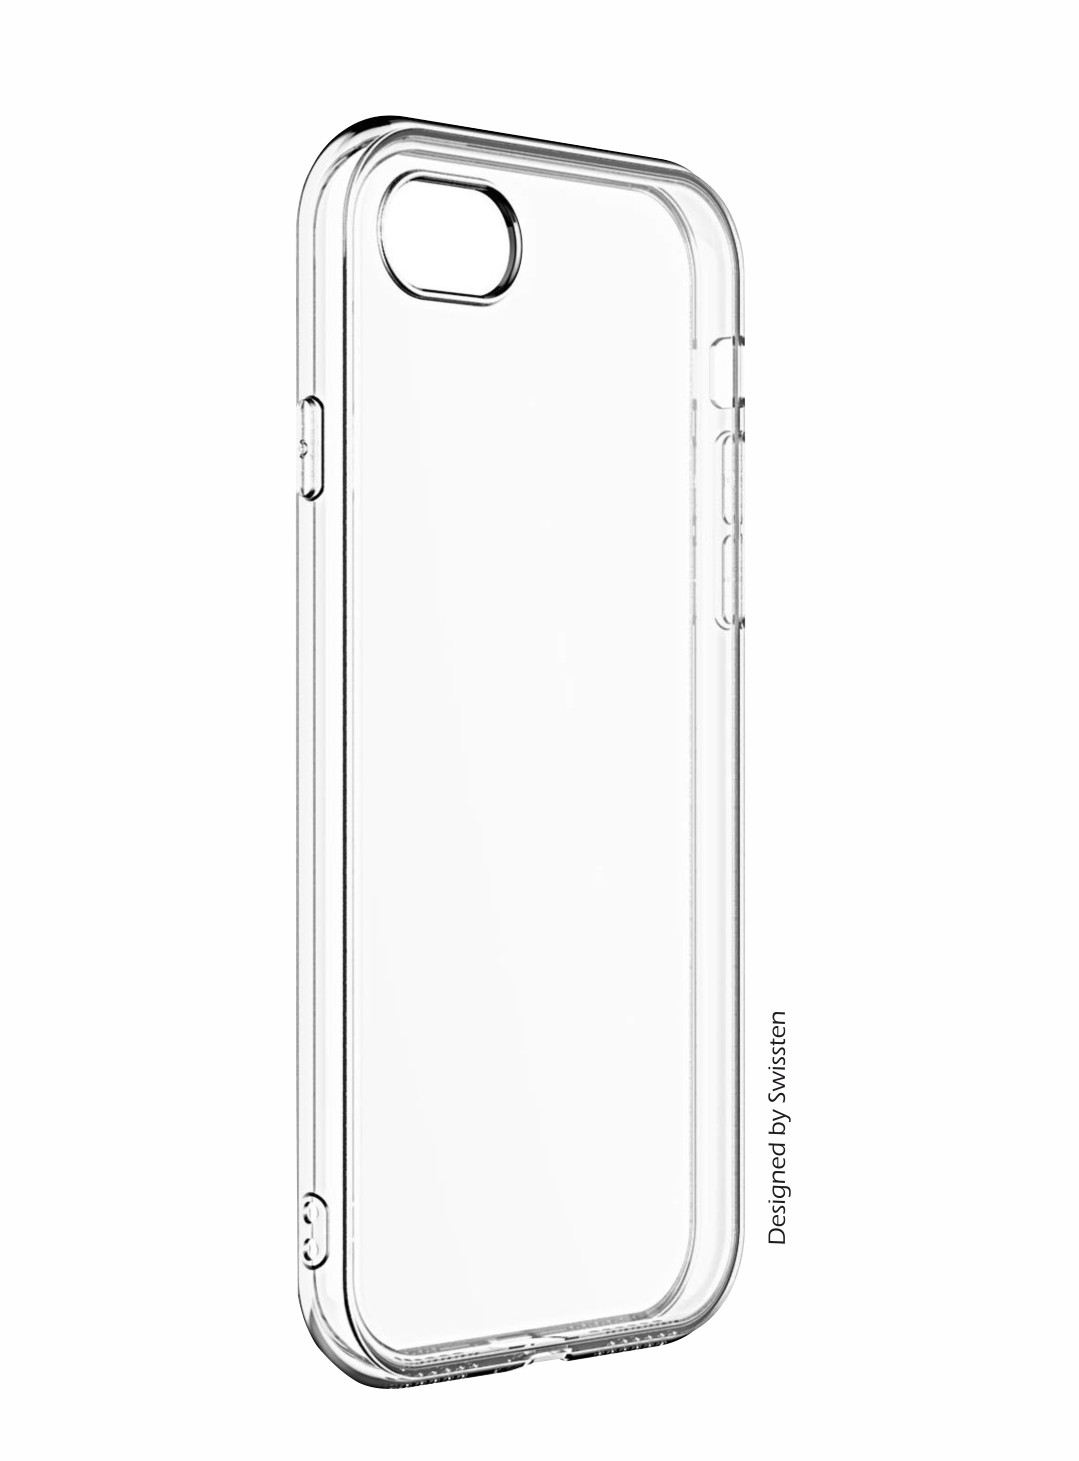 Swissten Clear Jelly Apple iPhone 11 PRO transparent thumb